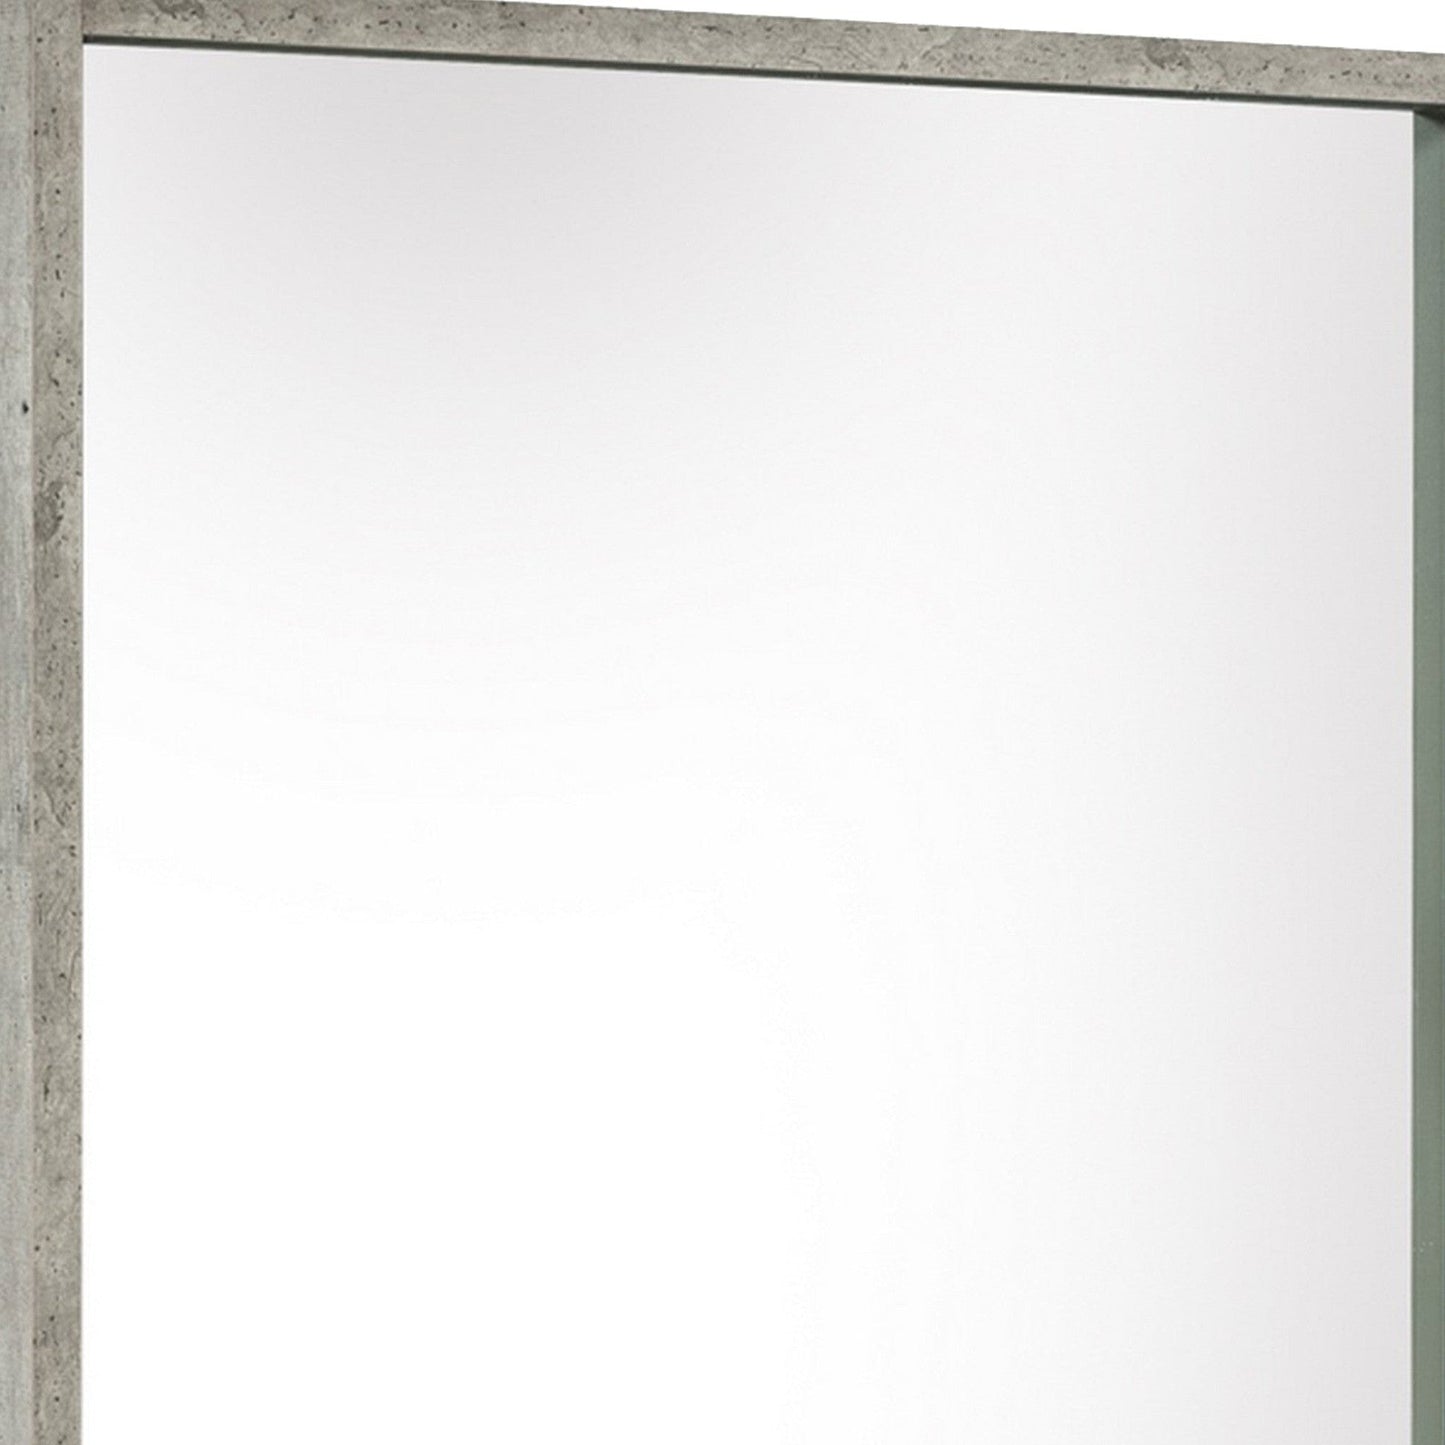 Benzara Gray Faux Concrete Wall Mirror With Mounting Hardware